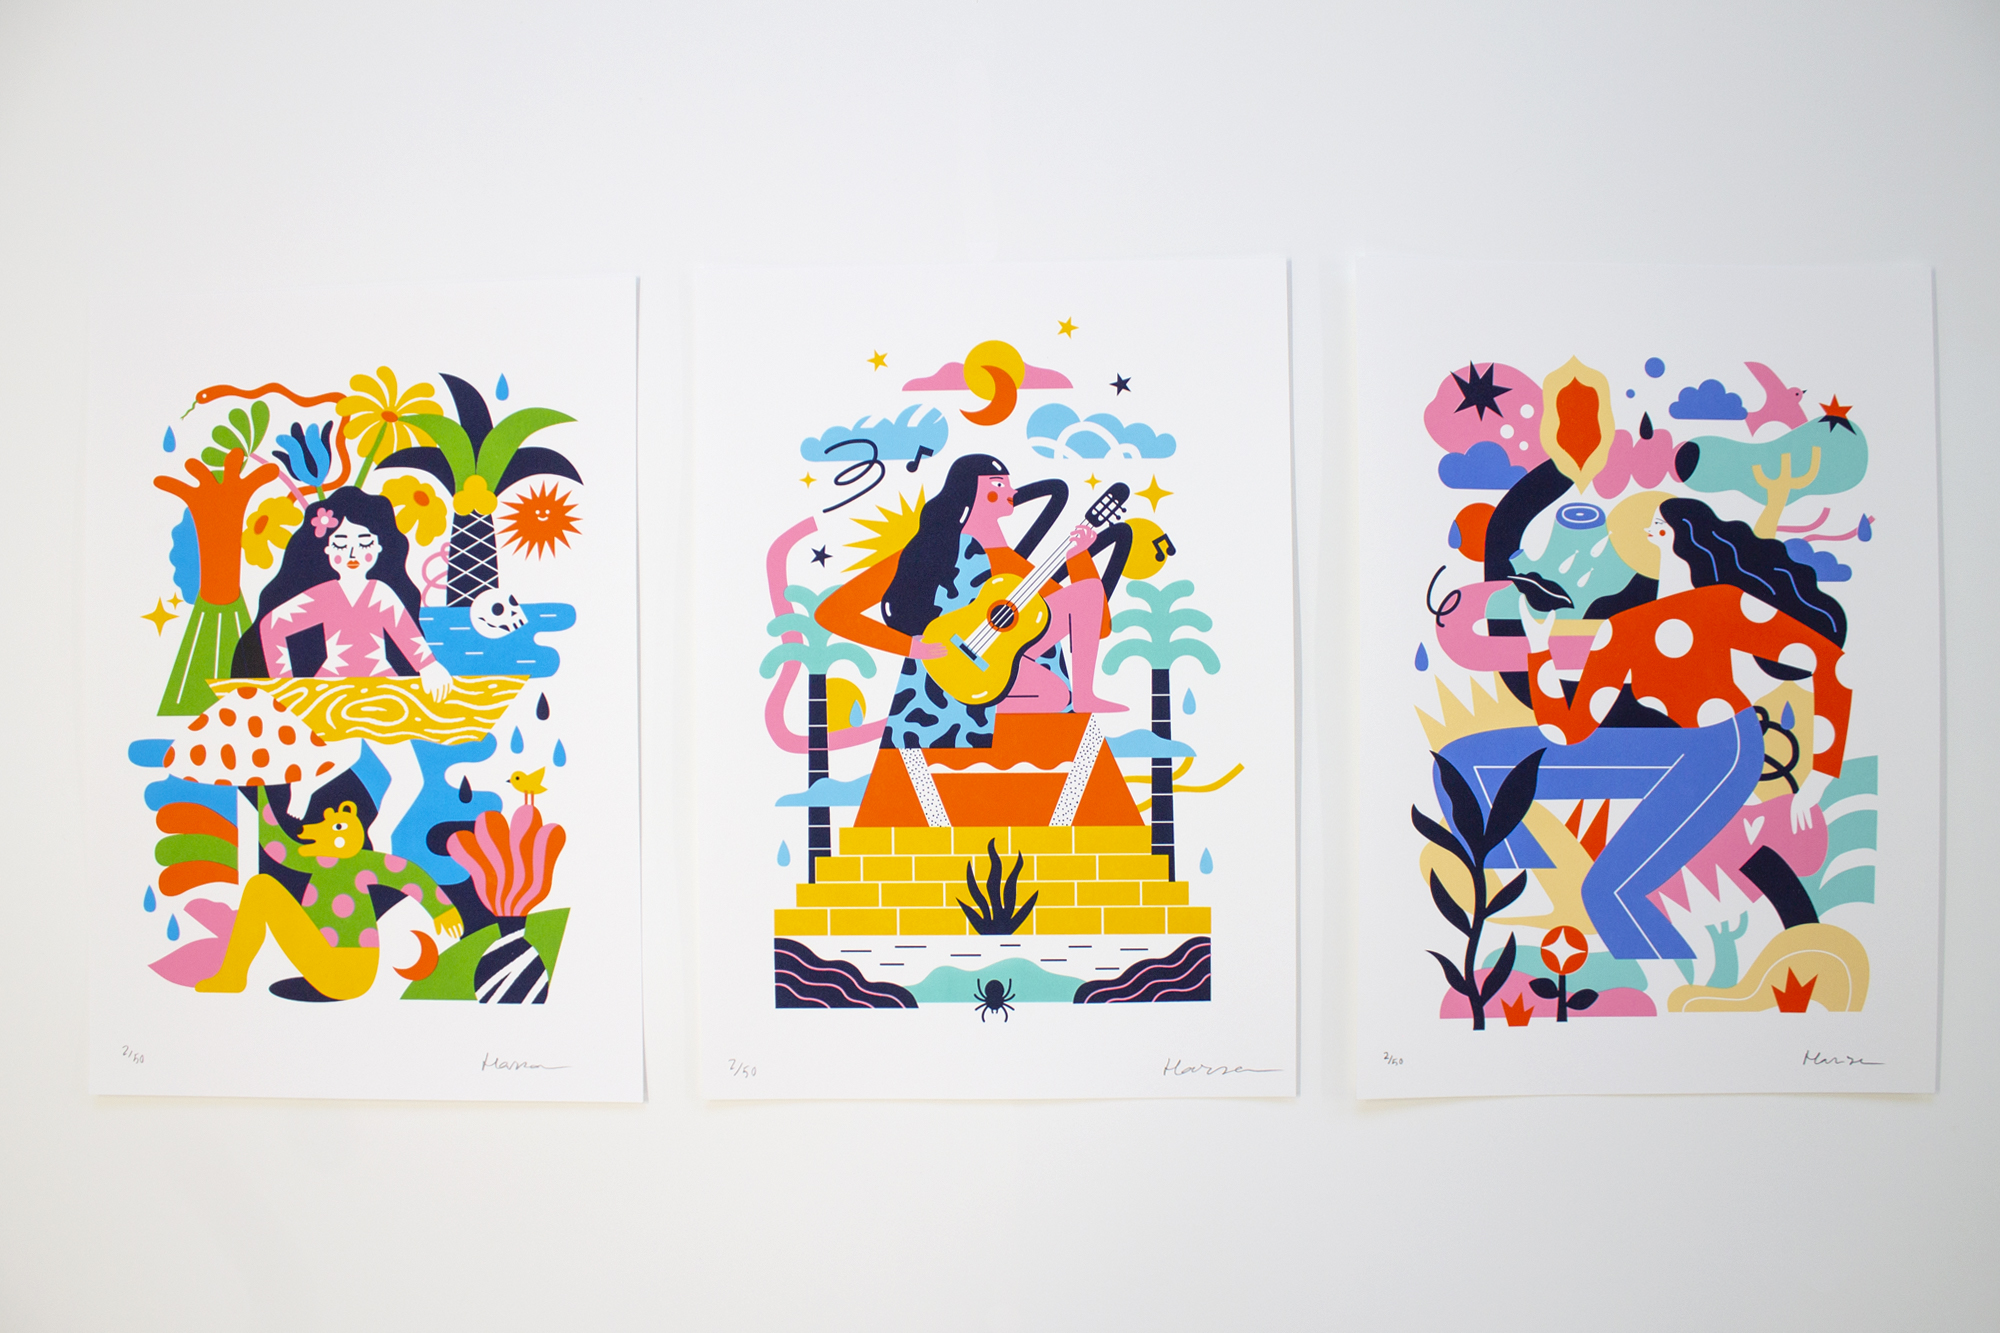 Tres serigrafías a seis tintas de la artista Harsa